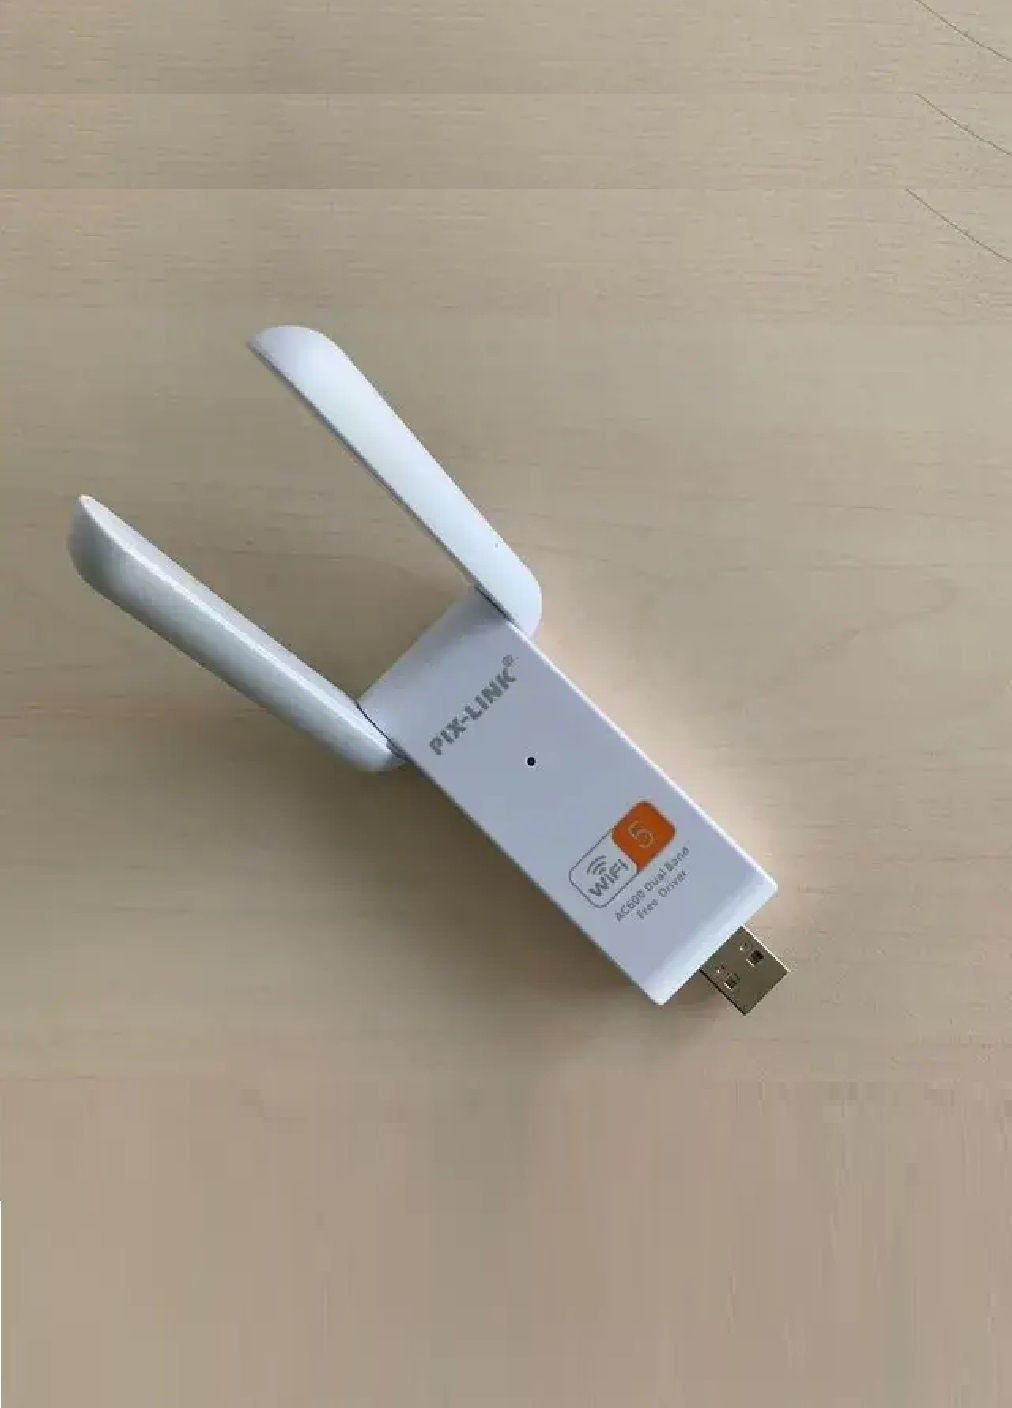 Сетевой USB 3.0 WiFi адаптер с двумя внешними антеннами 600Mbps 2.4GHz/5GHz для Windows (476353-Prob) Белый Unbranded (279518090)